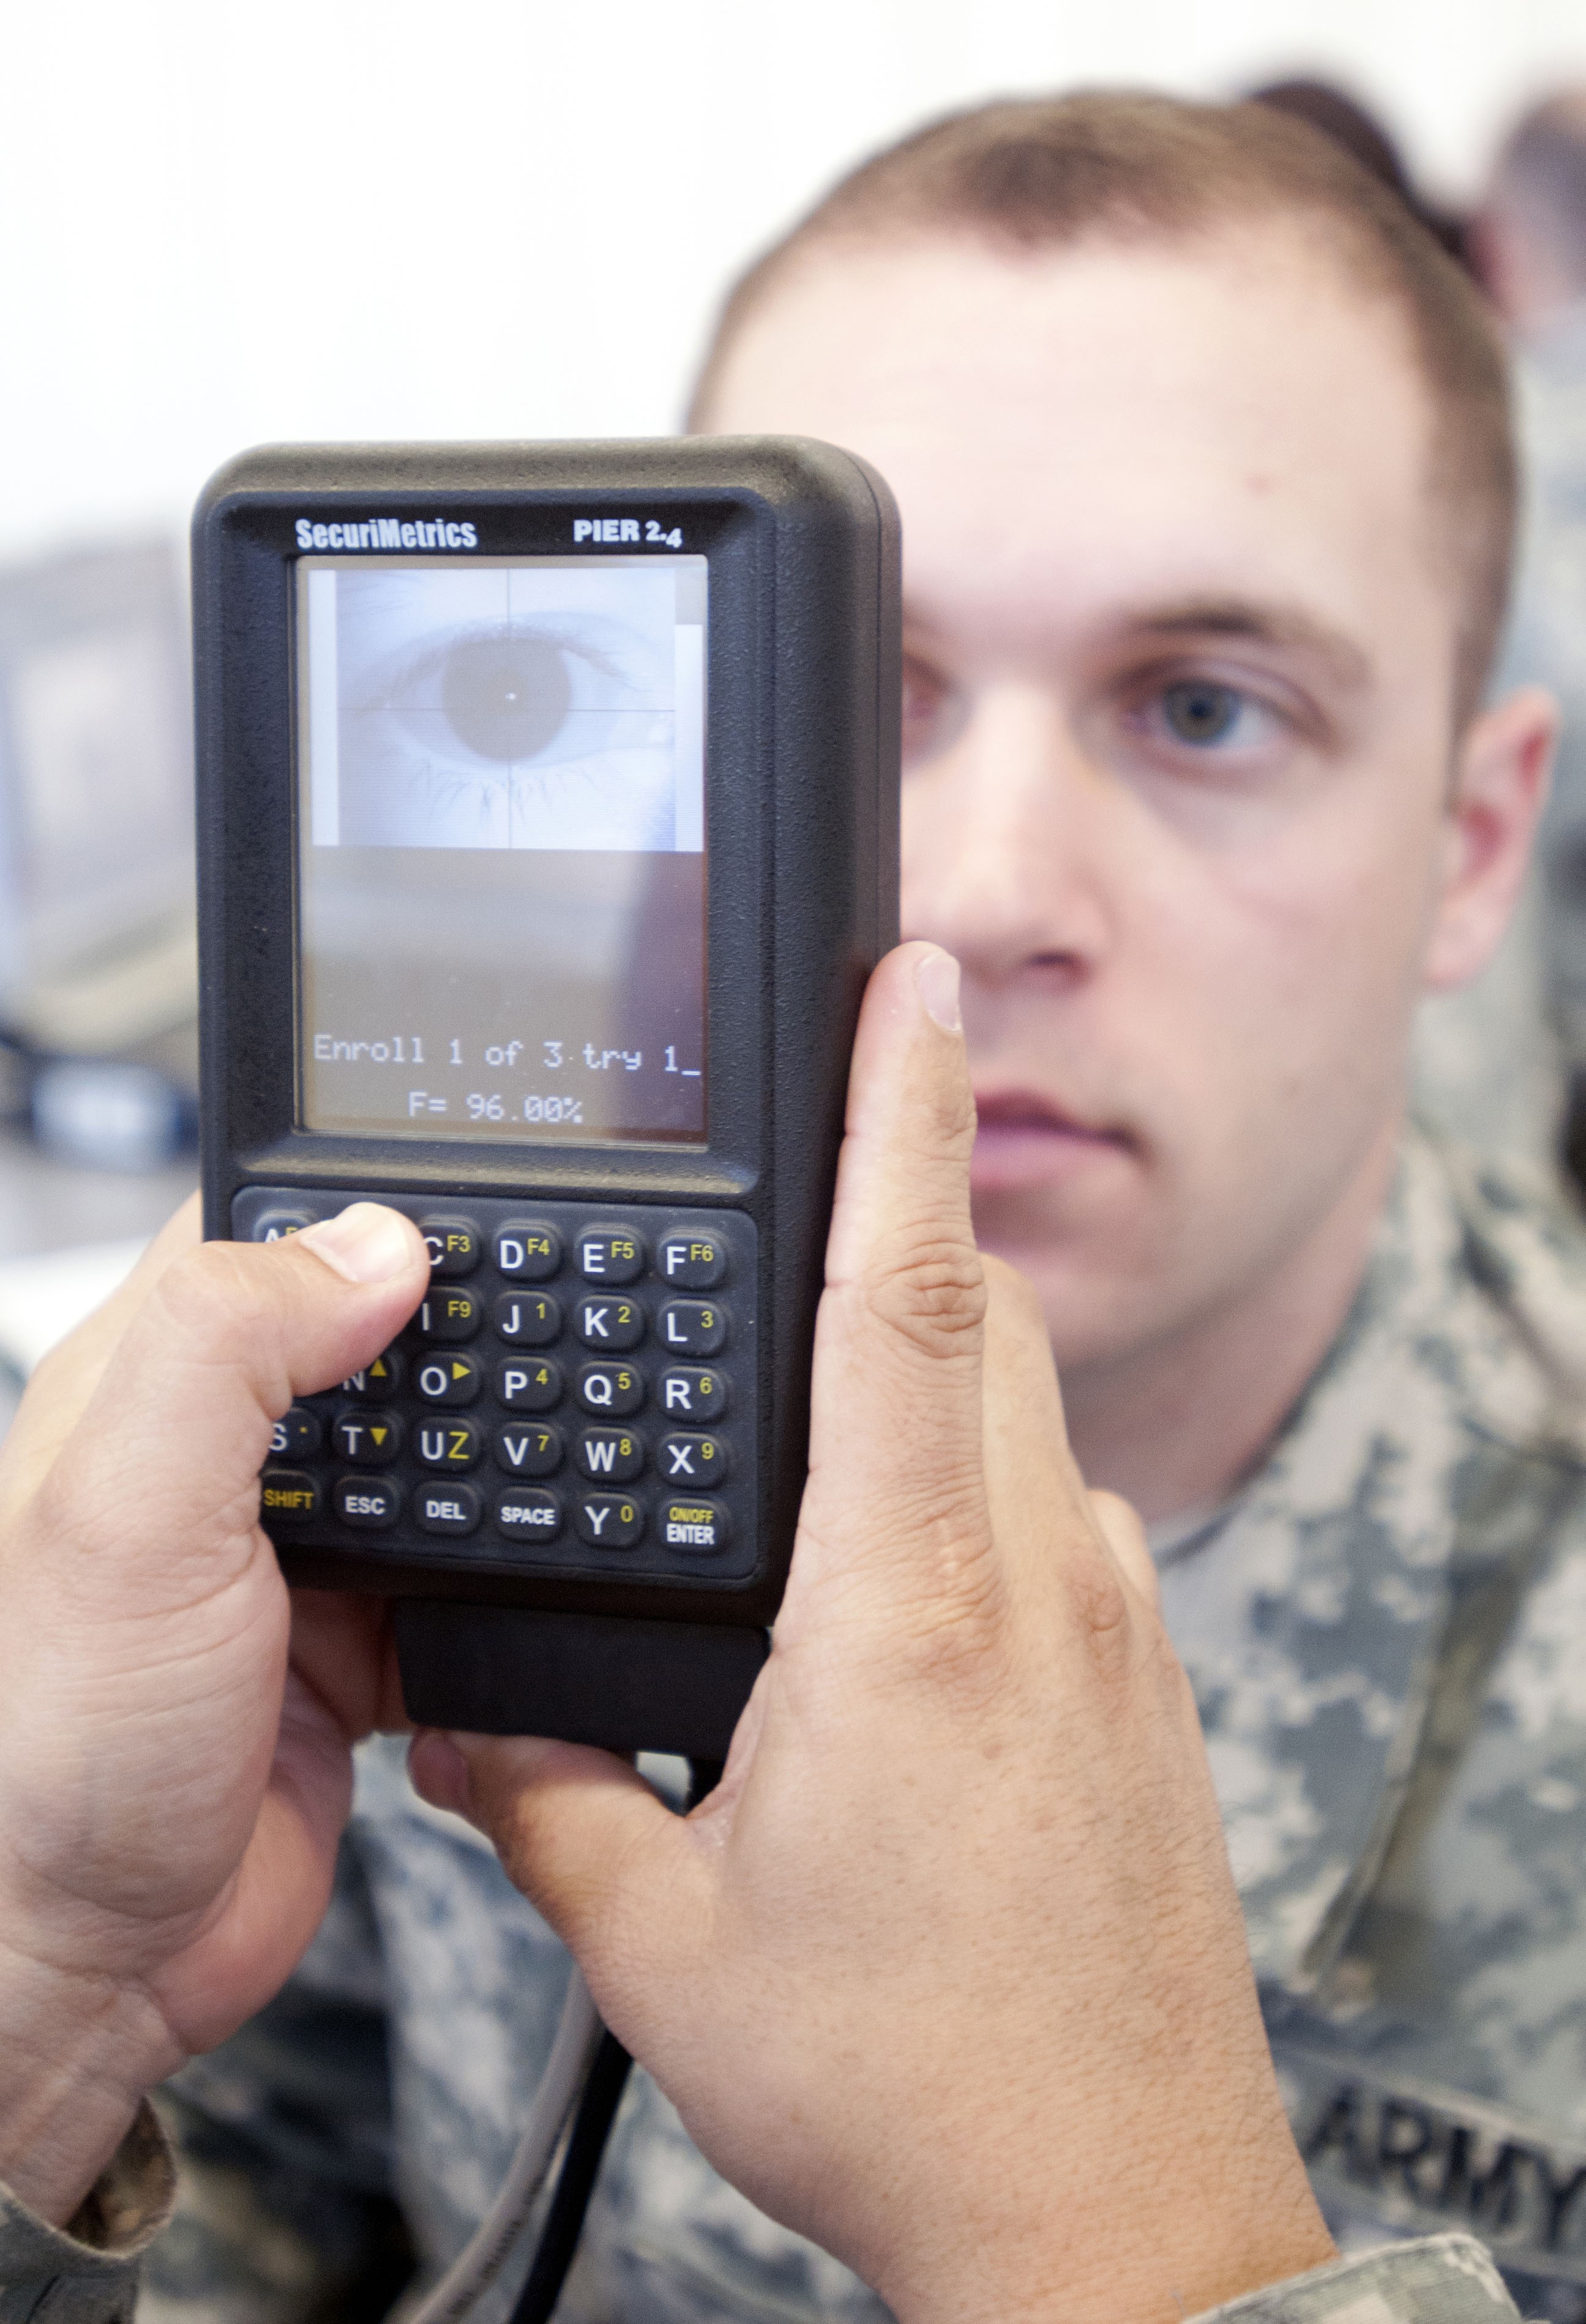 hiide portable biometric device